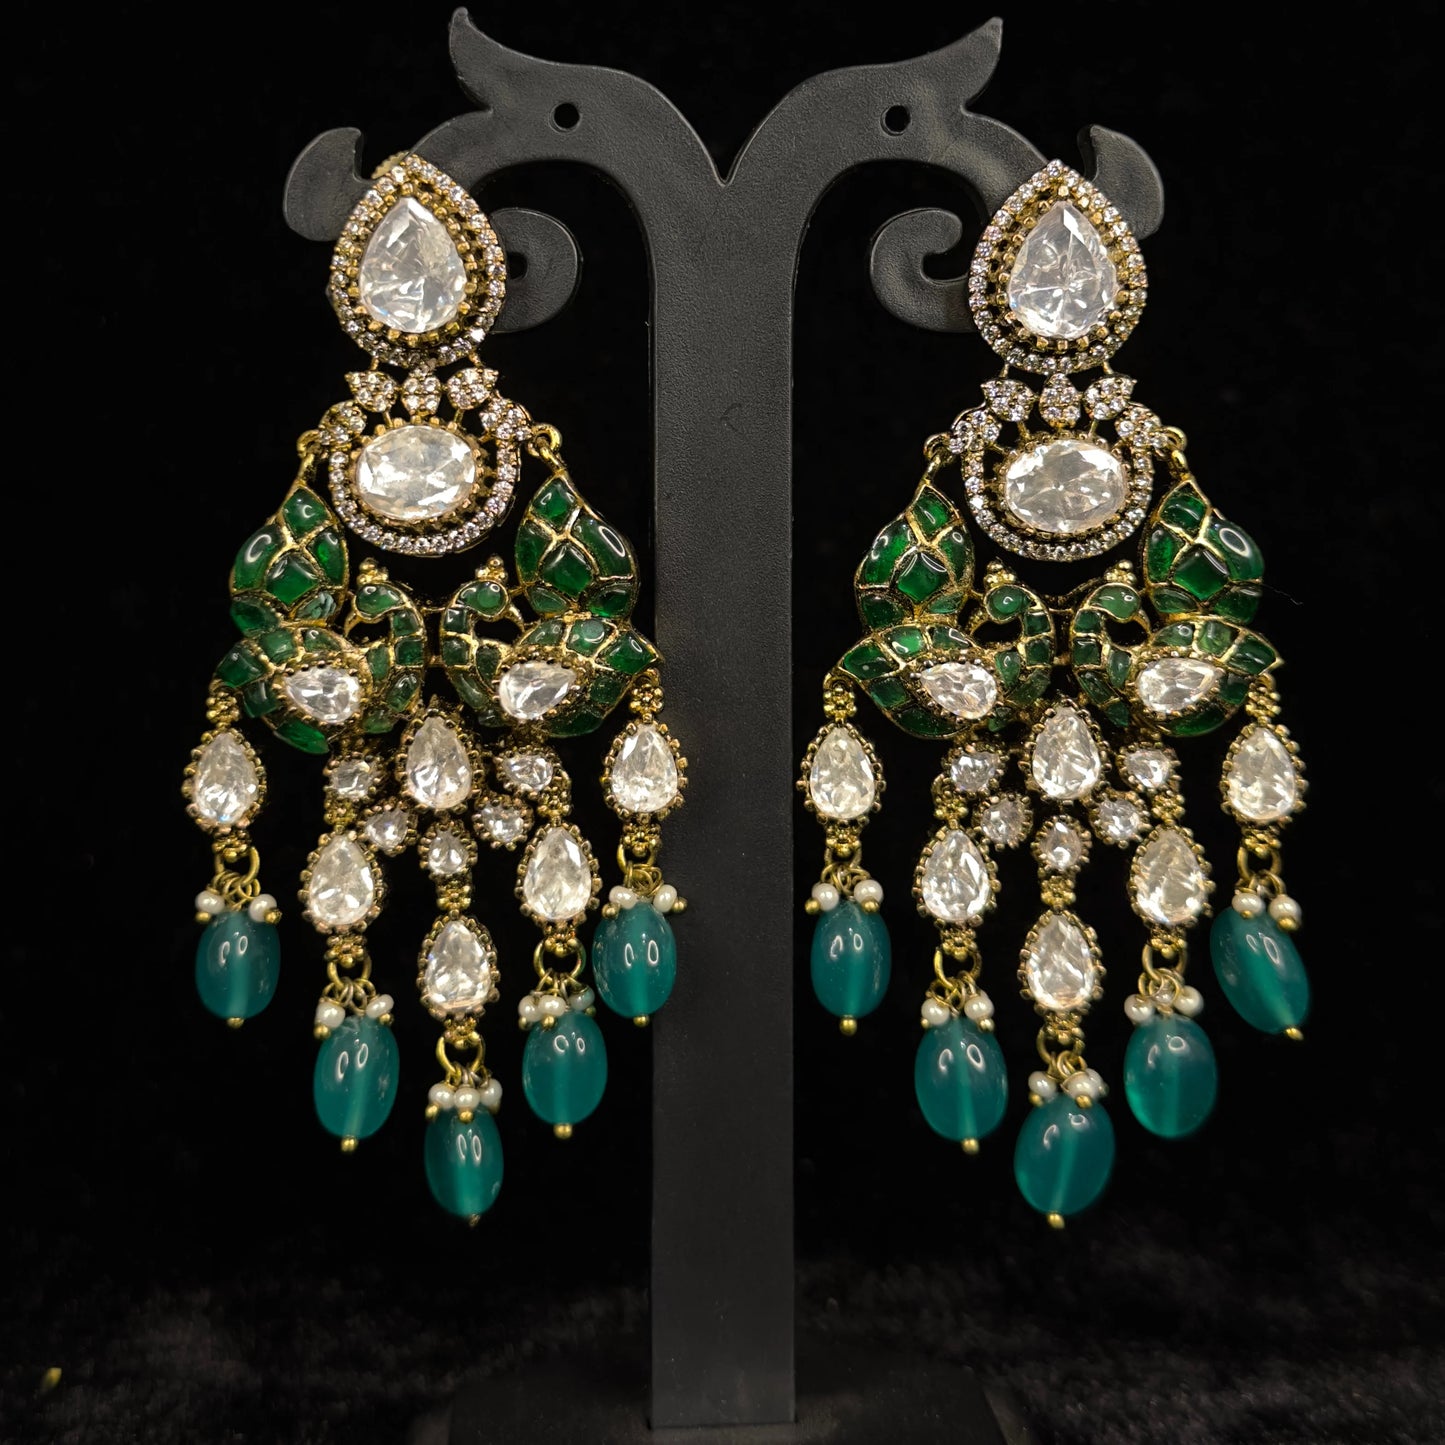 Timeless Victorian x Jadau Earrings with freshwater pearls